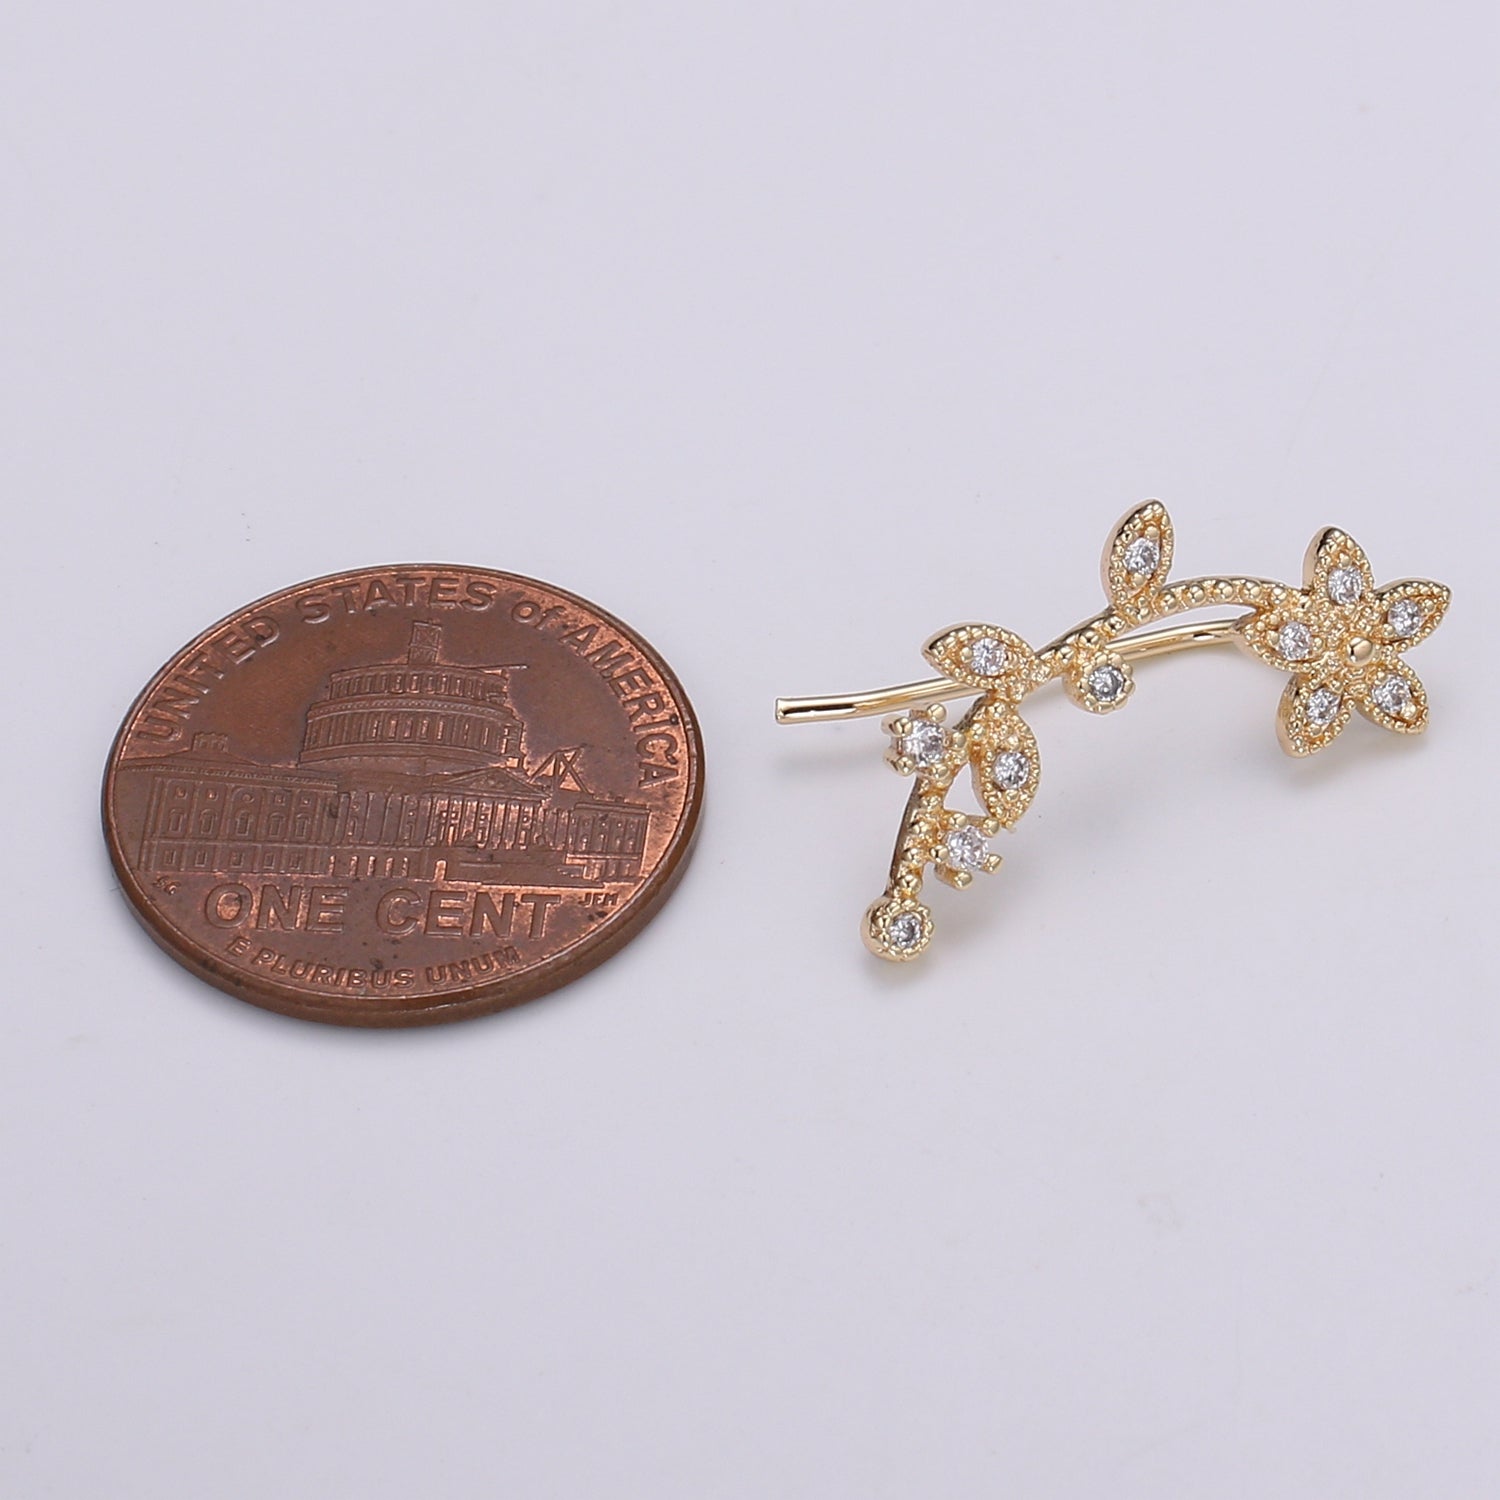 1 pair Minimalist Jasmine Ear Crawlers | Ear Climbers | Bridesmaid Earrings | Ear Crawler | Bridesmaid Gift |Mother’s Day Gift - DLUXCA